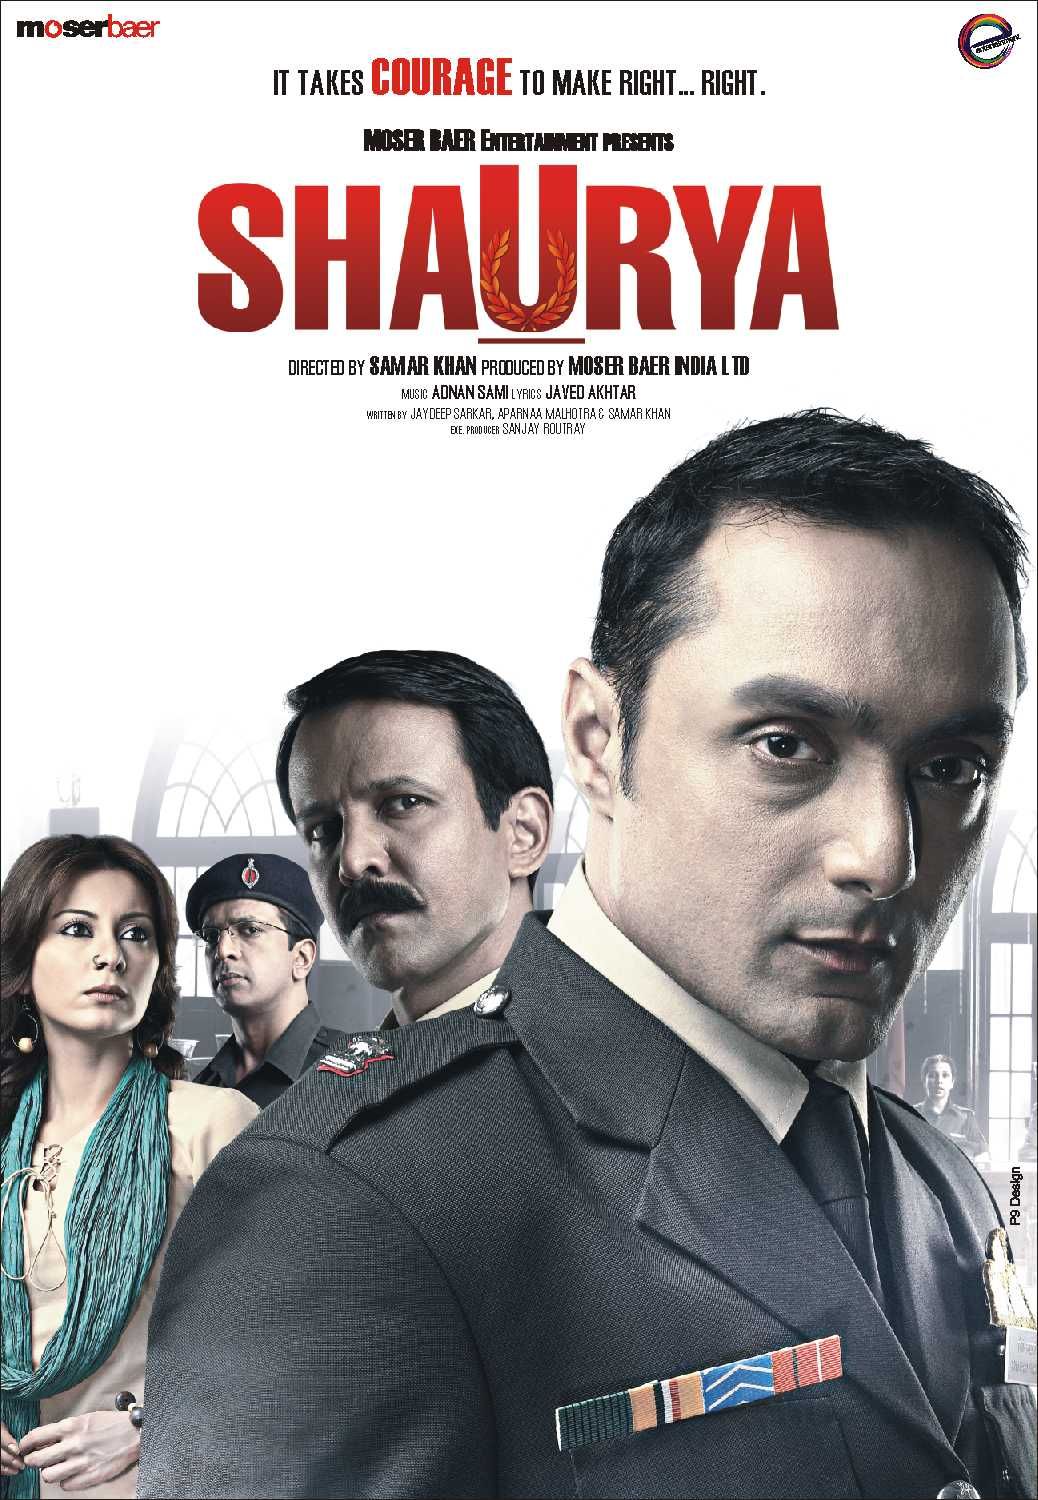 shaurya movie review greatandhra